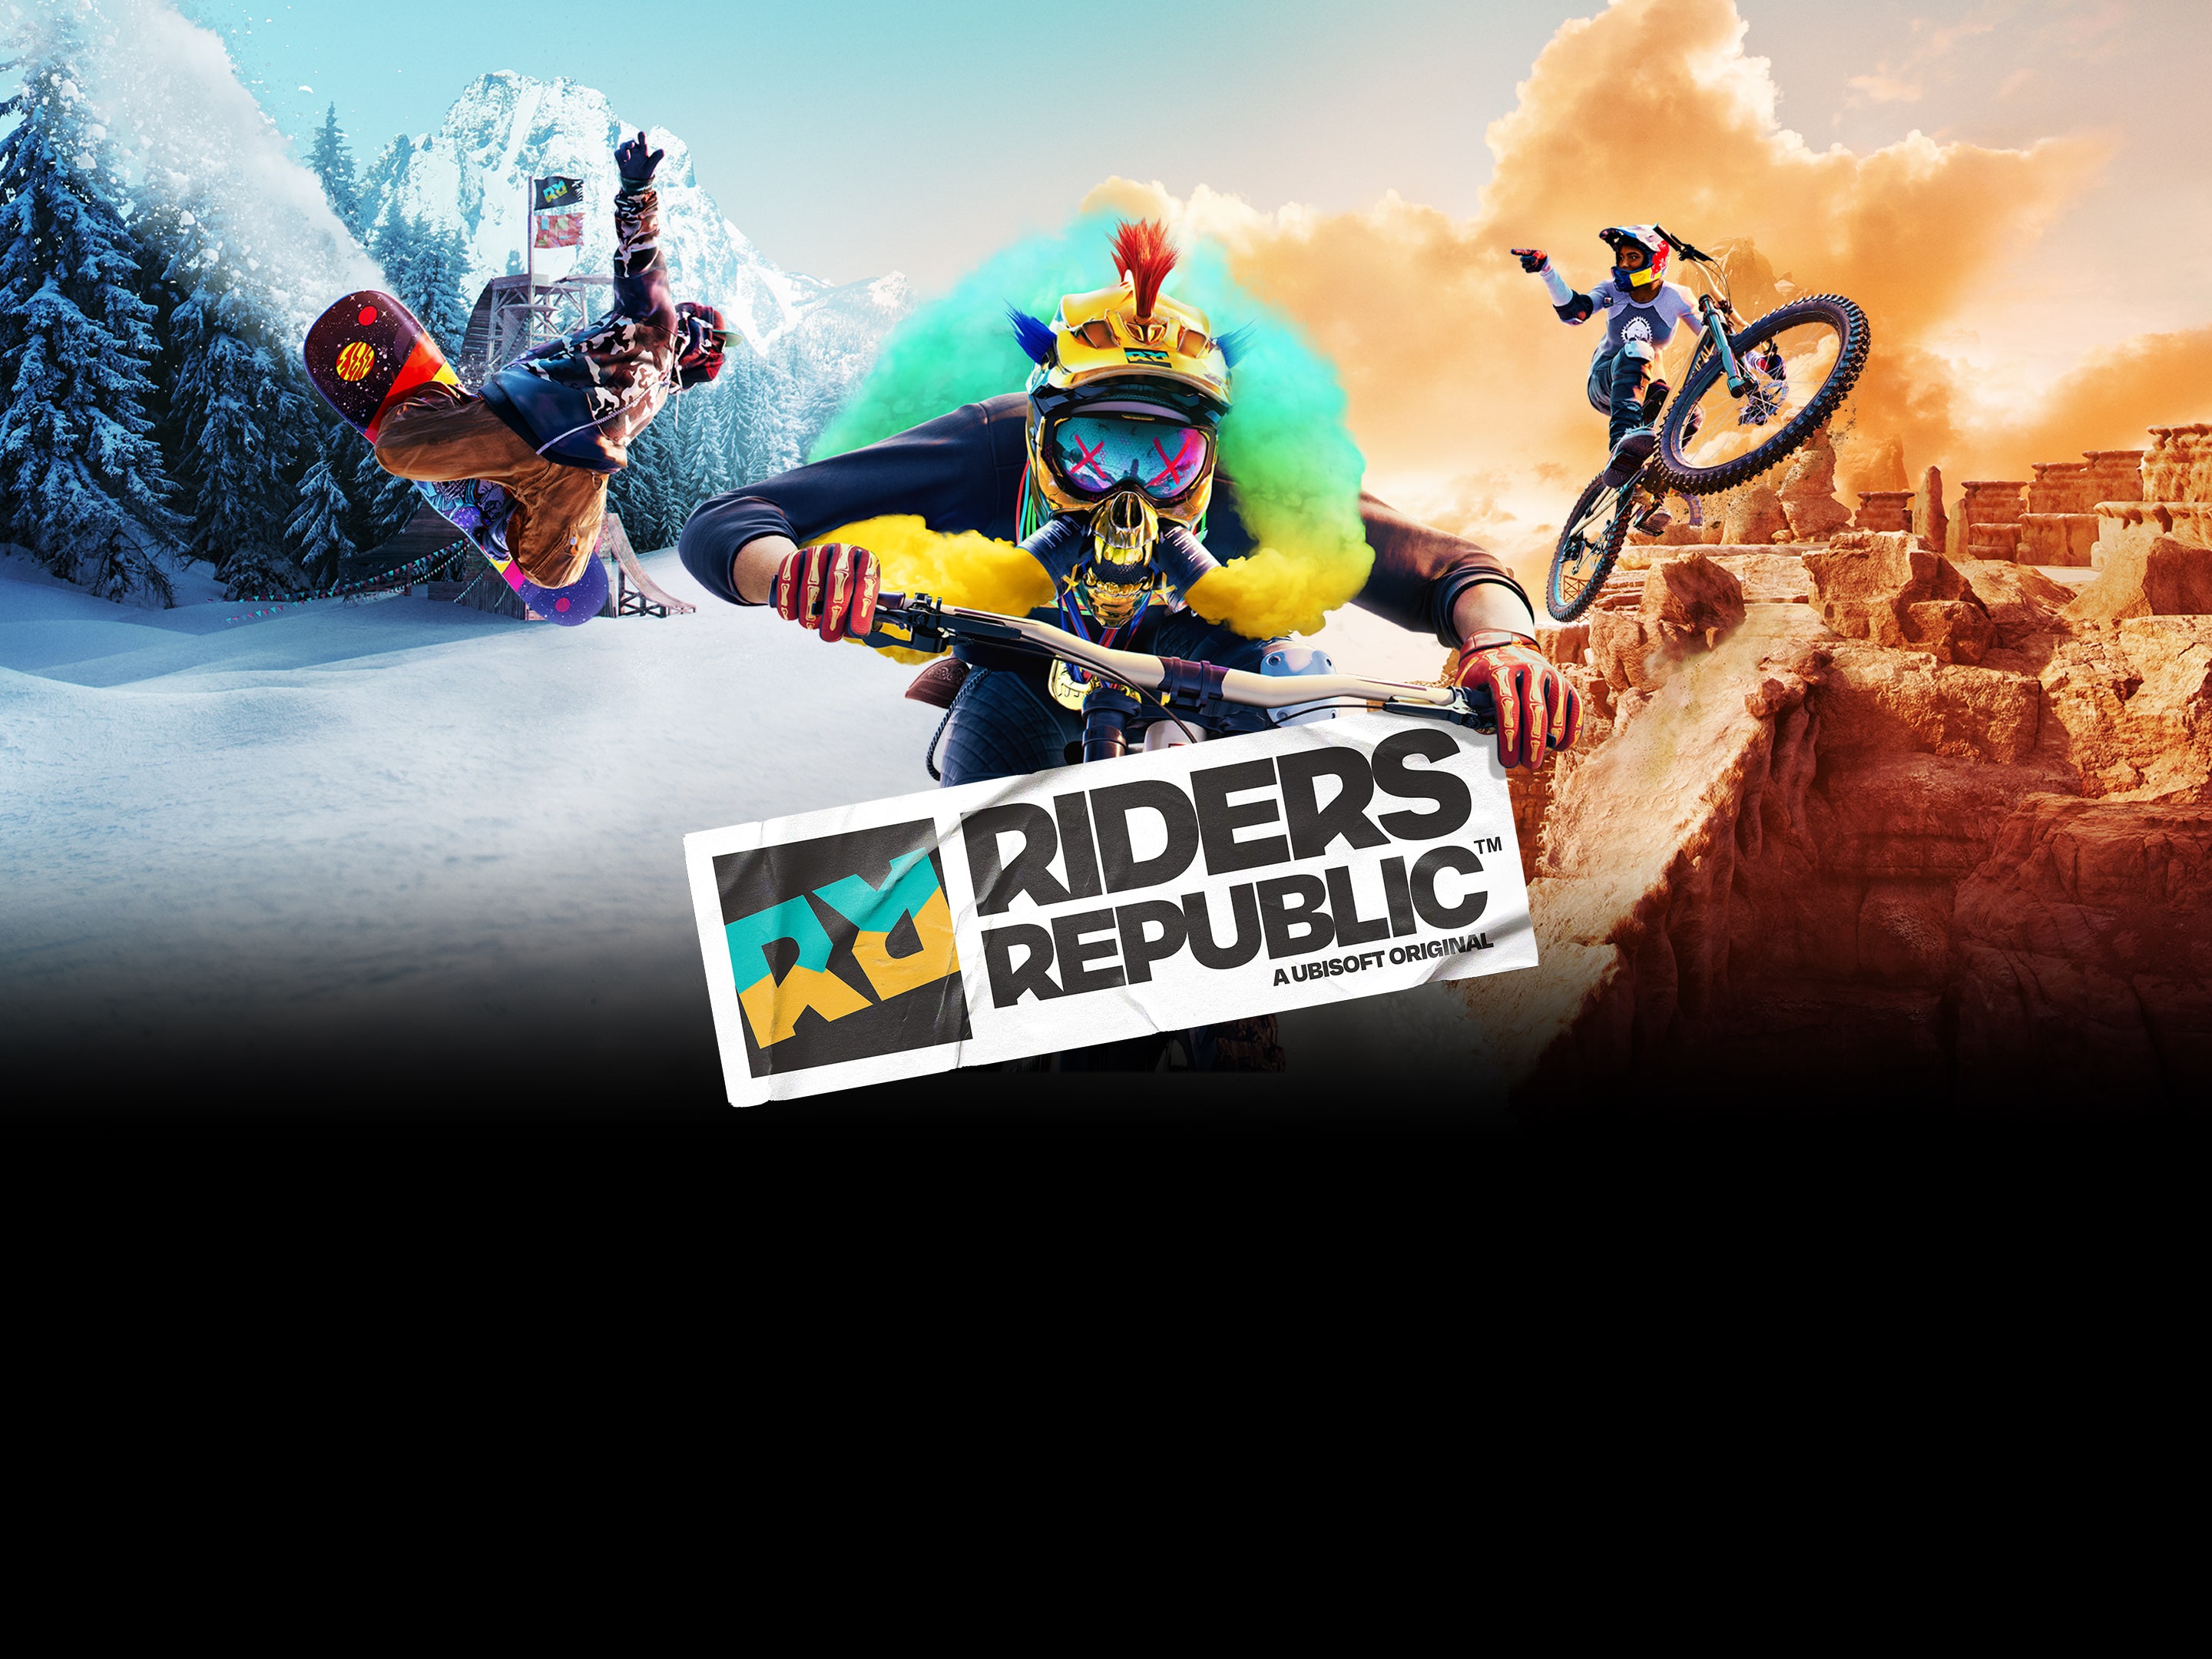 Riders Republic (PS5) 